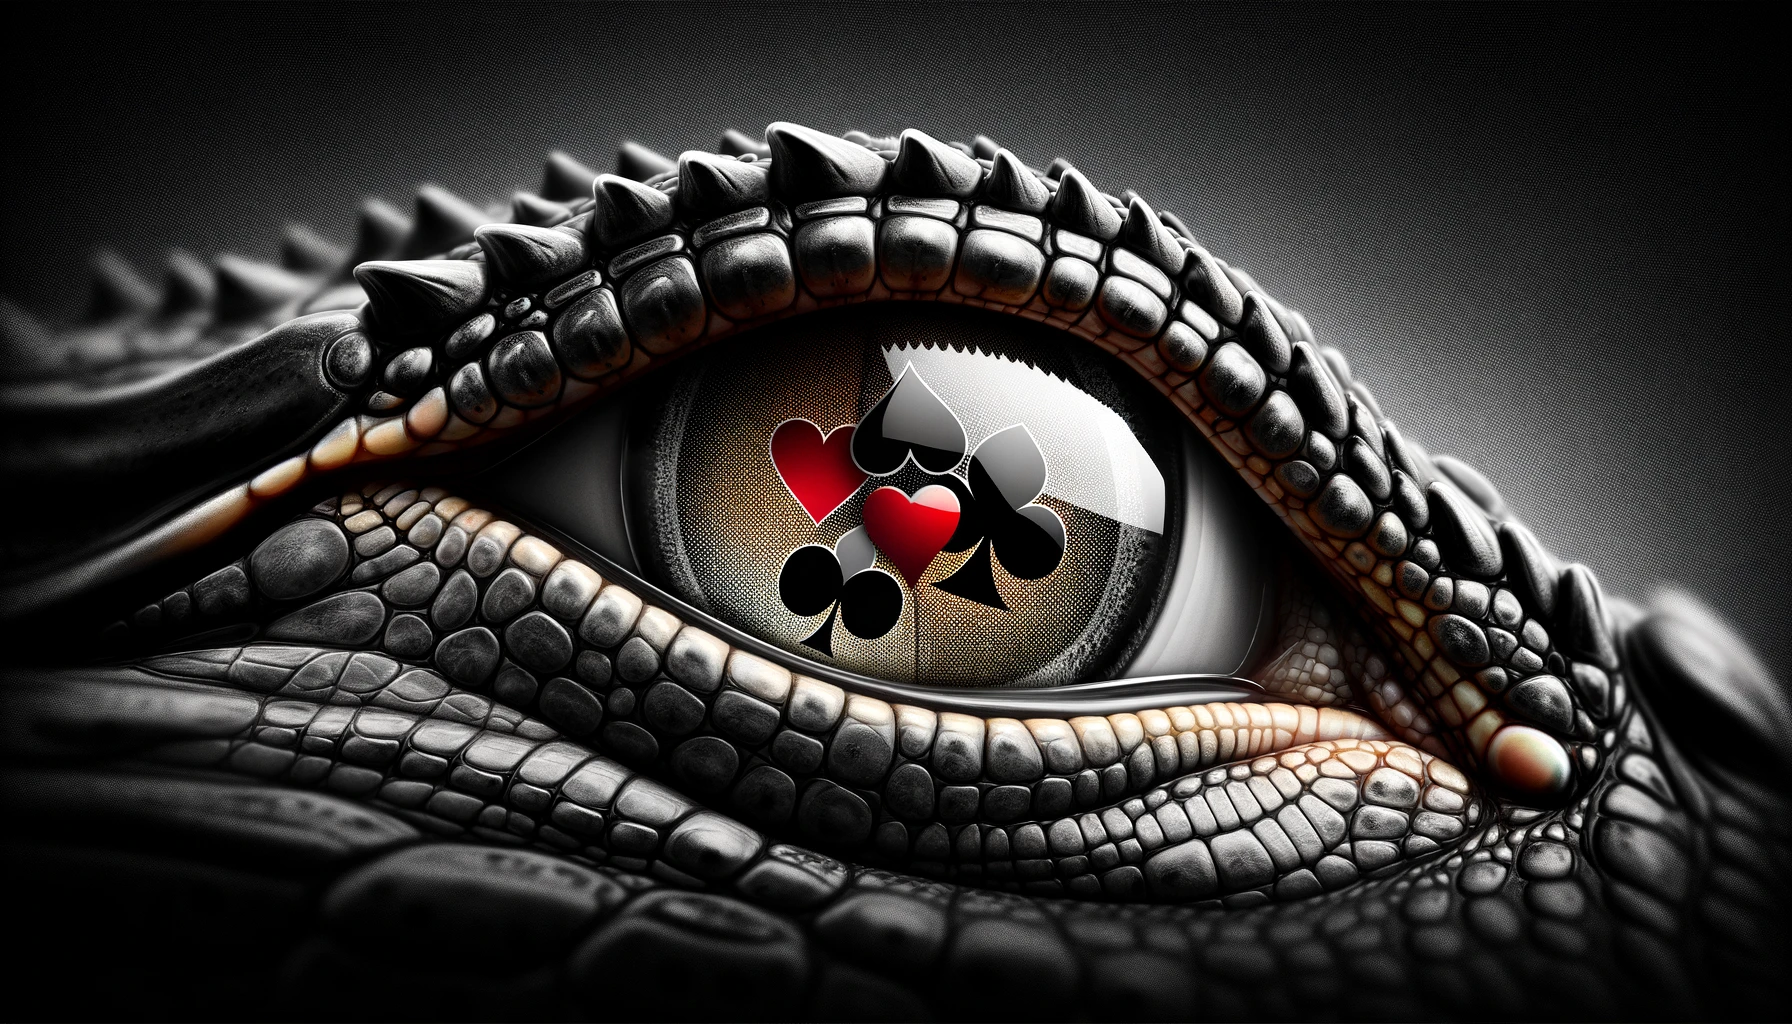 featuring an alligator's eye,